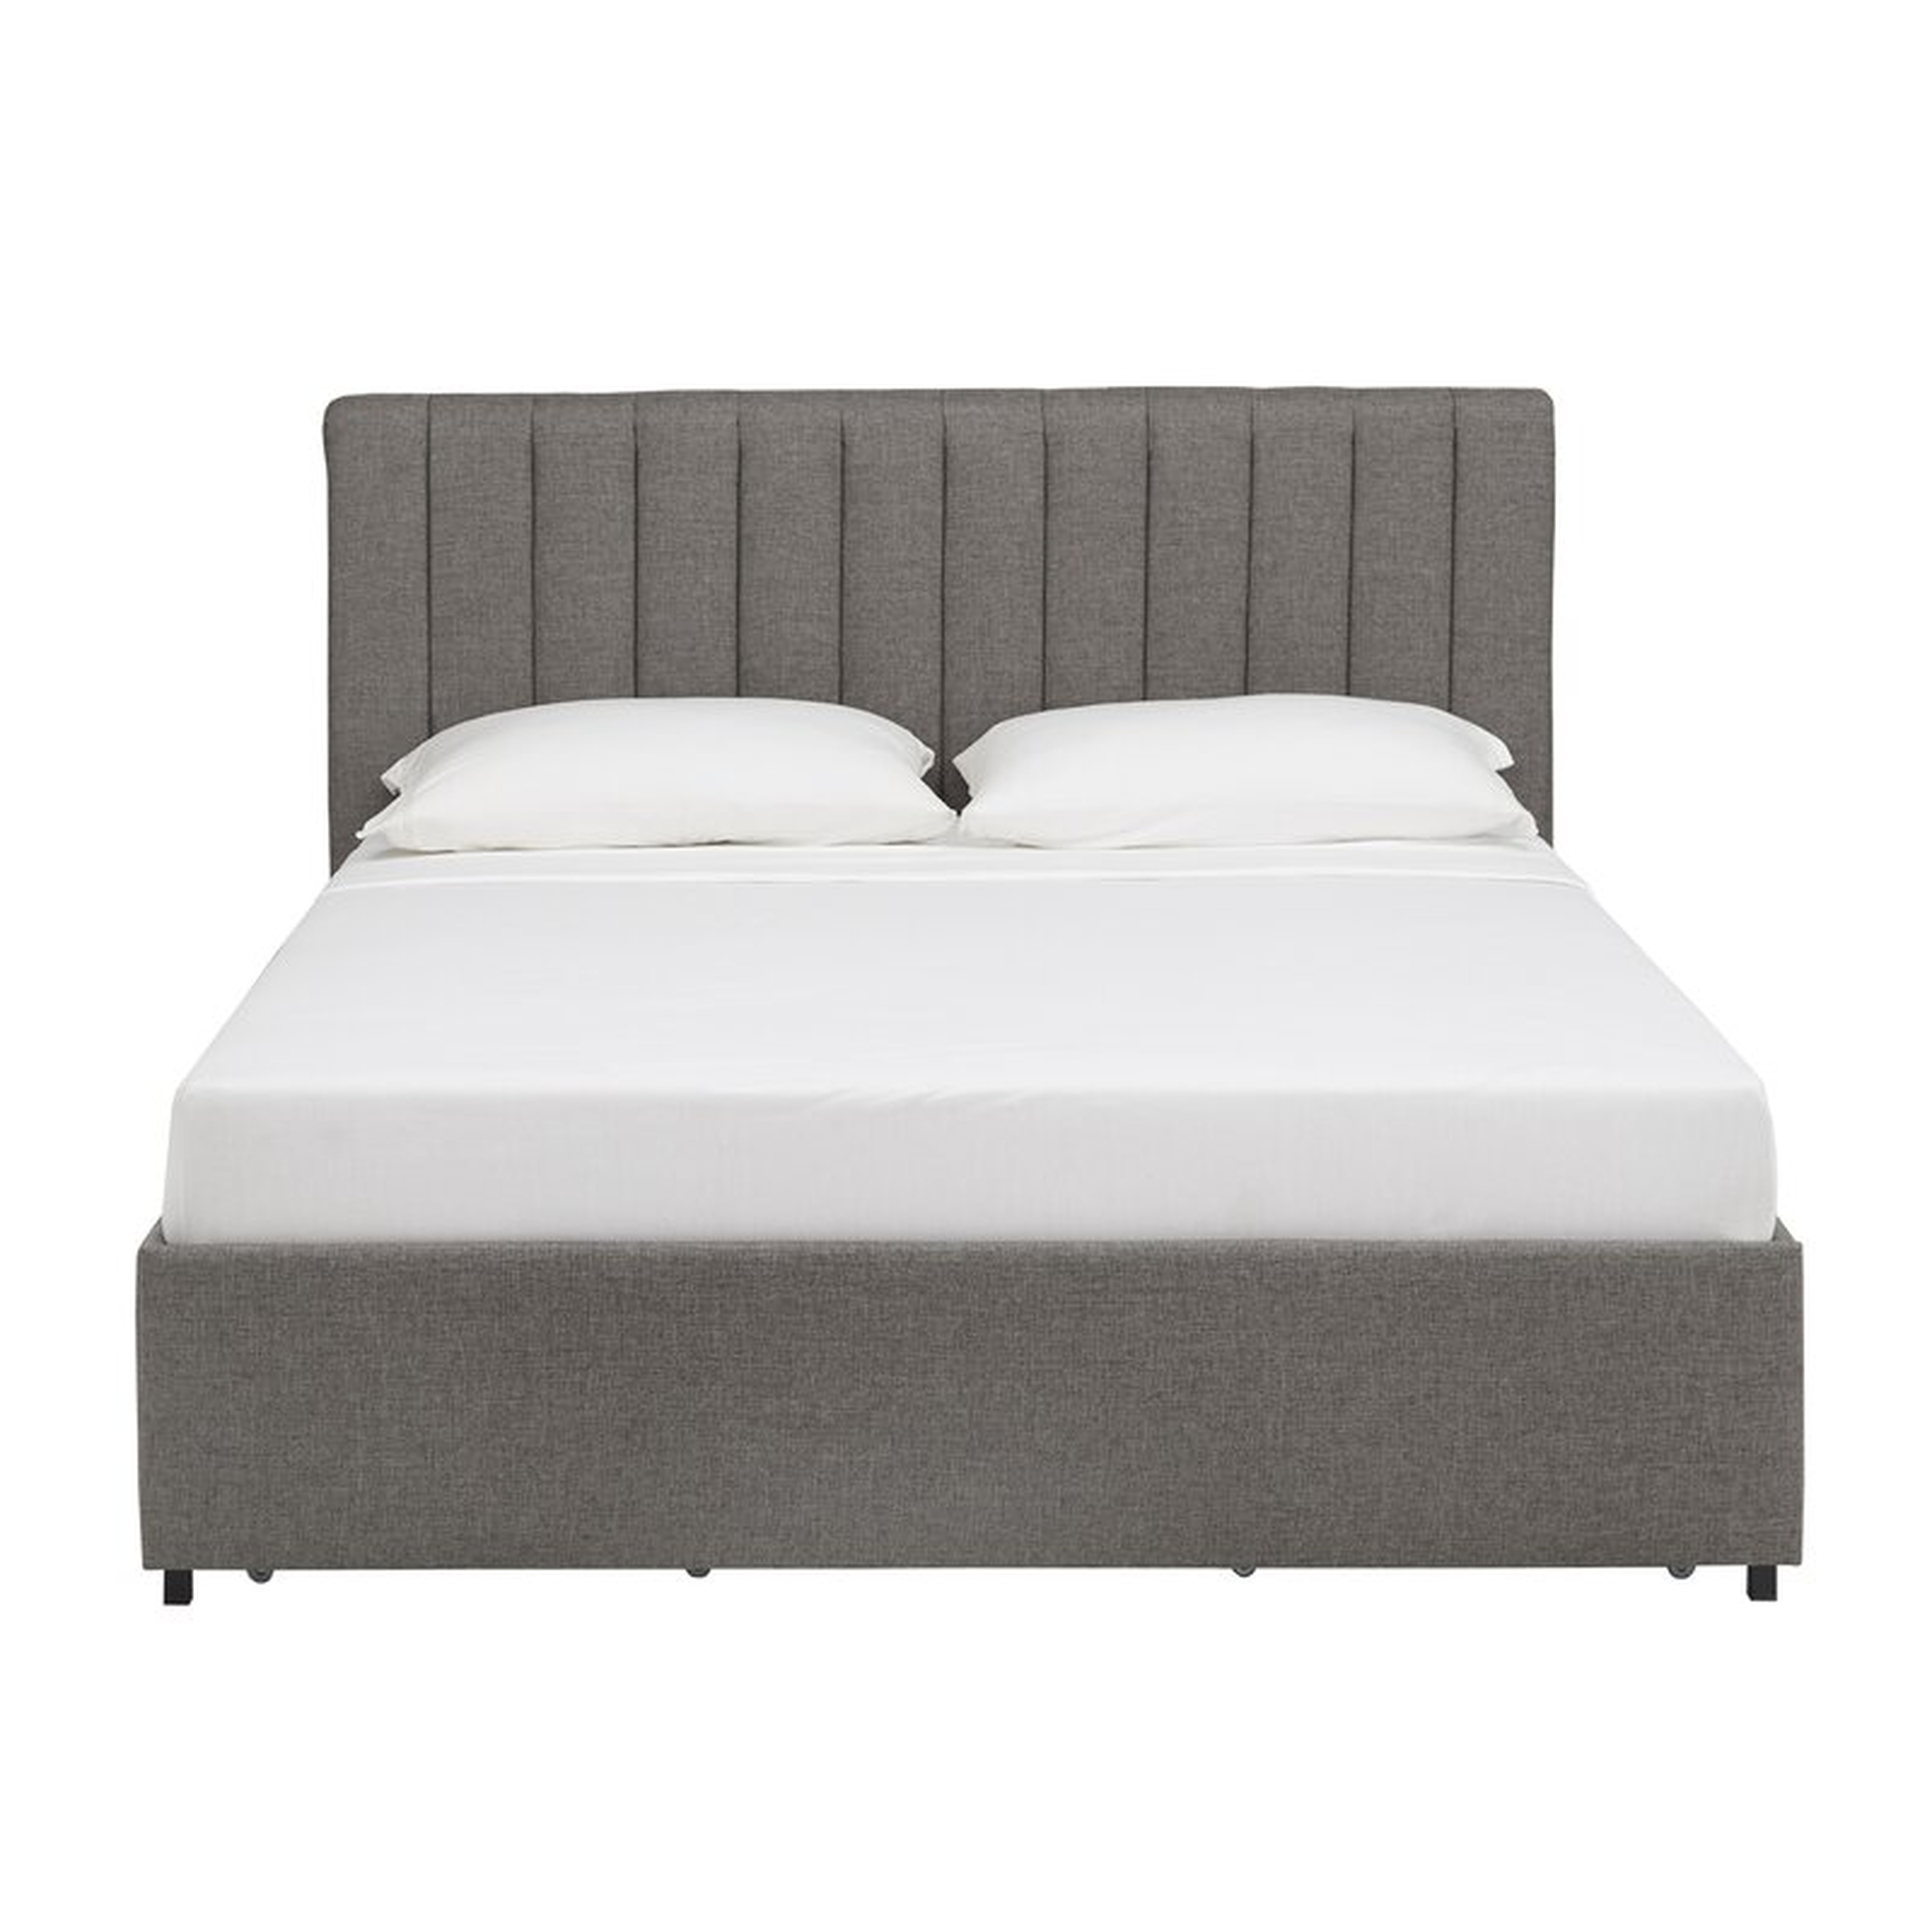 Gaylen Upholstered Low Profile Storage Platform Bed - Wayfair